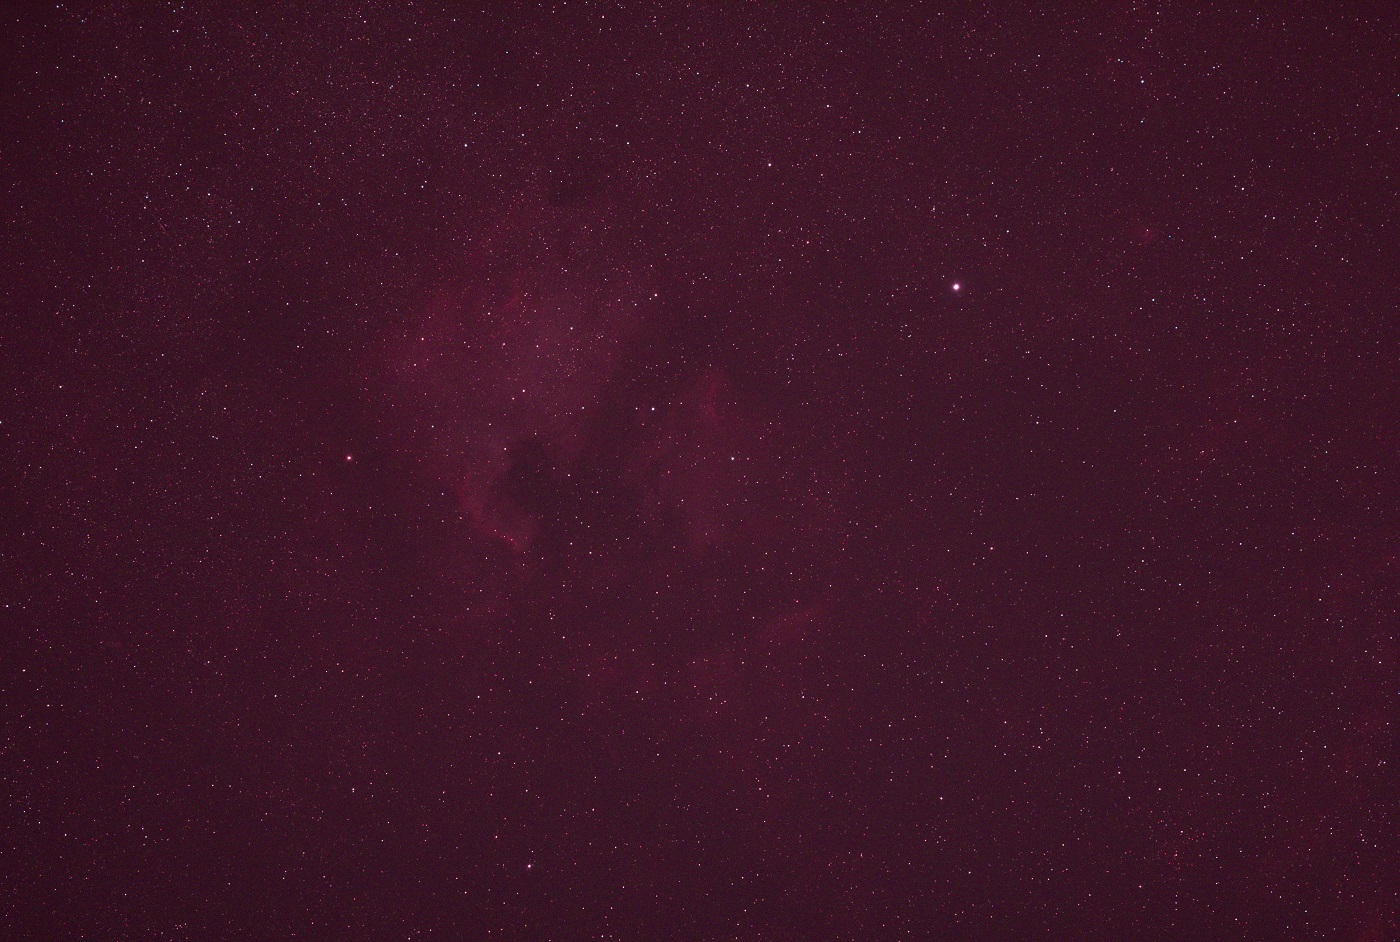 Astrophotography, North America Nebula - single exposure.